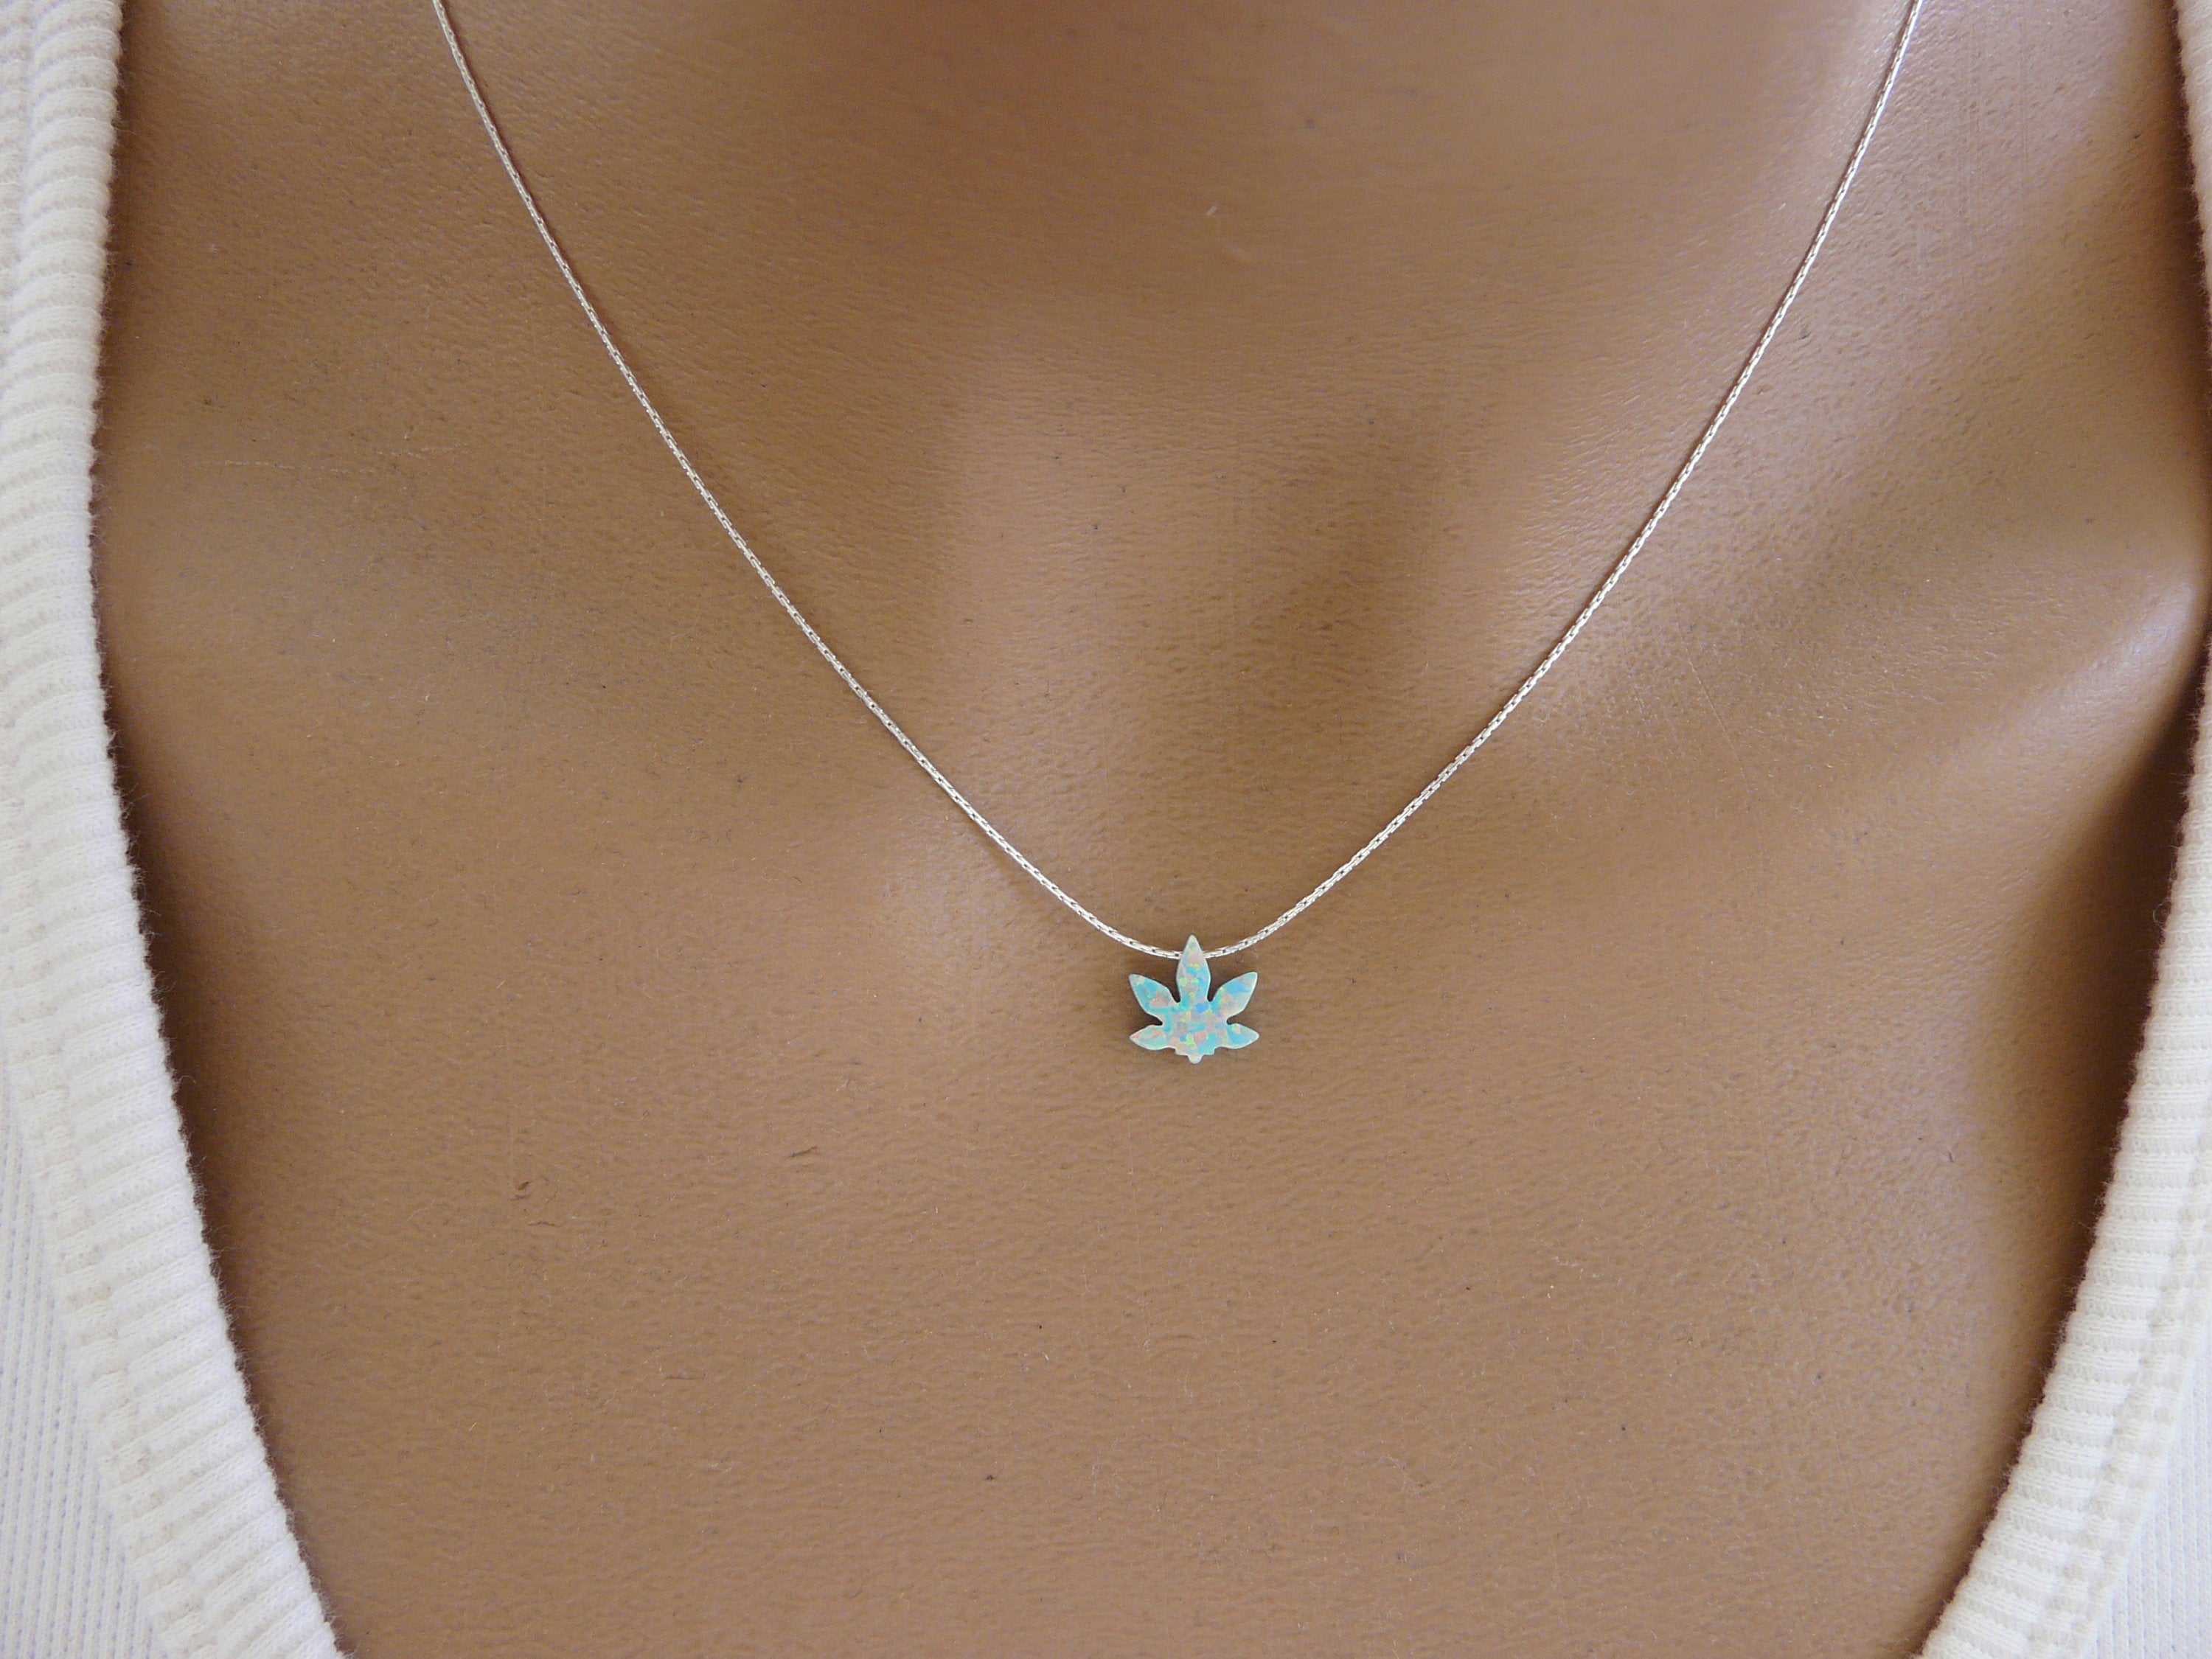 Cannabis necklace